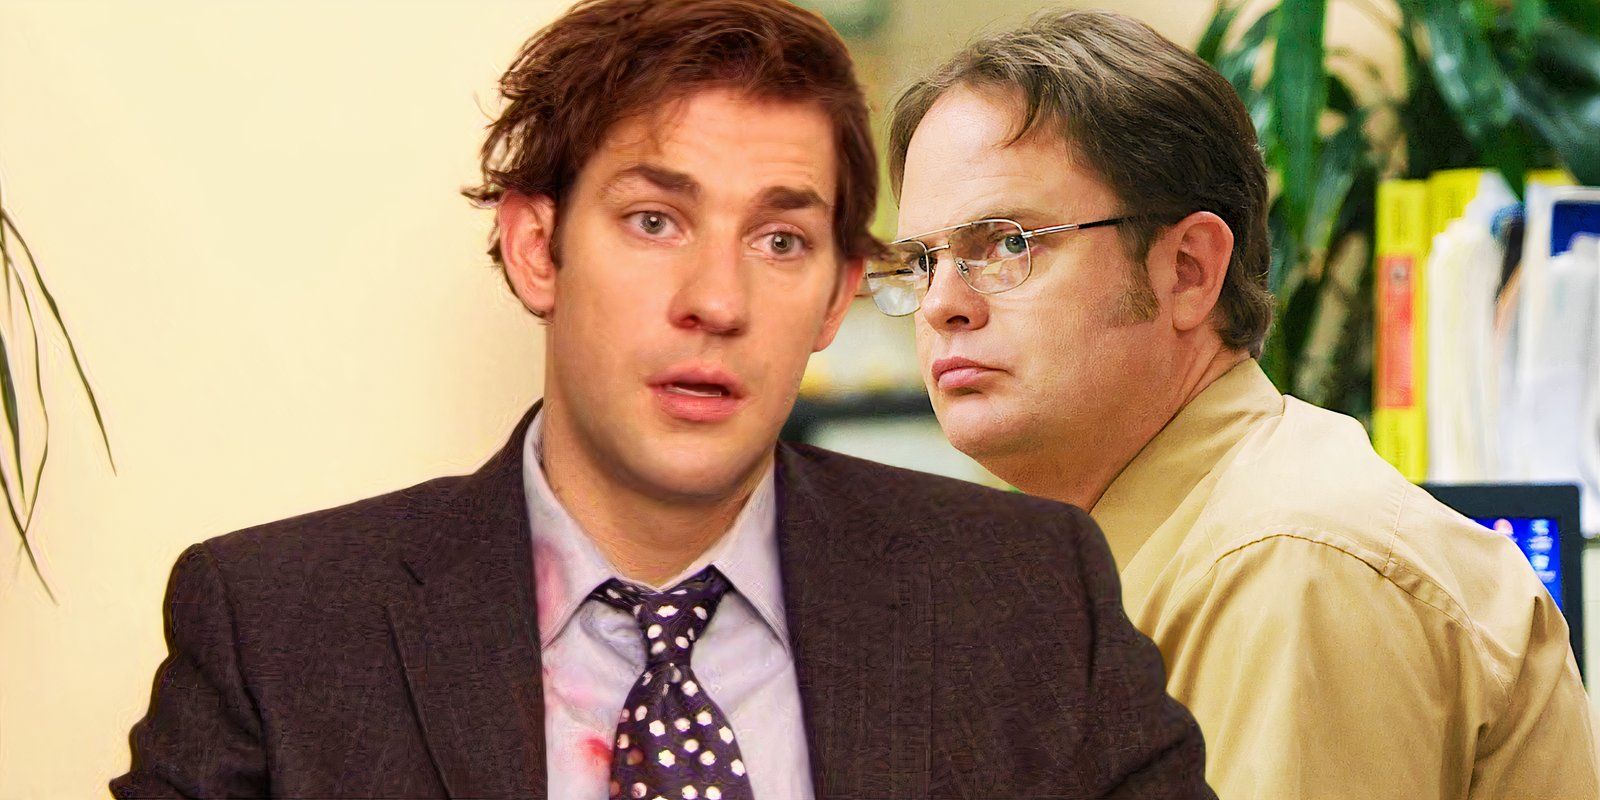 John Krasinski as Jim juxtaposed with Rainn Wilson as Dwight in The Office